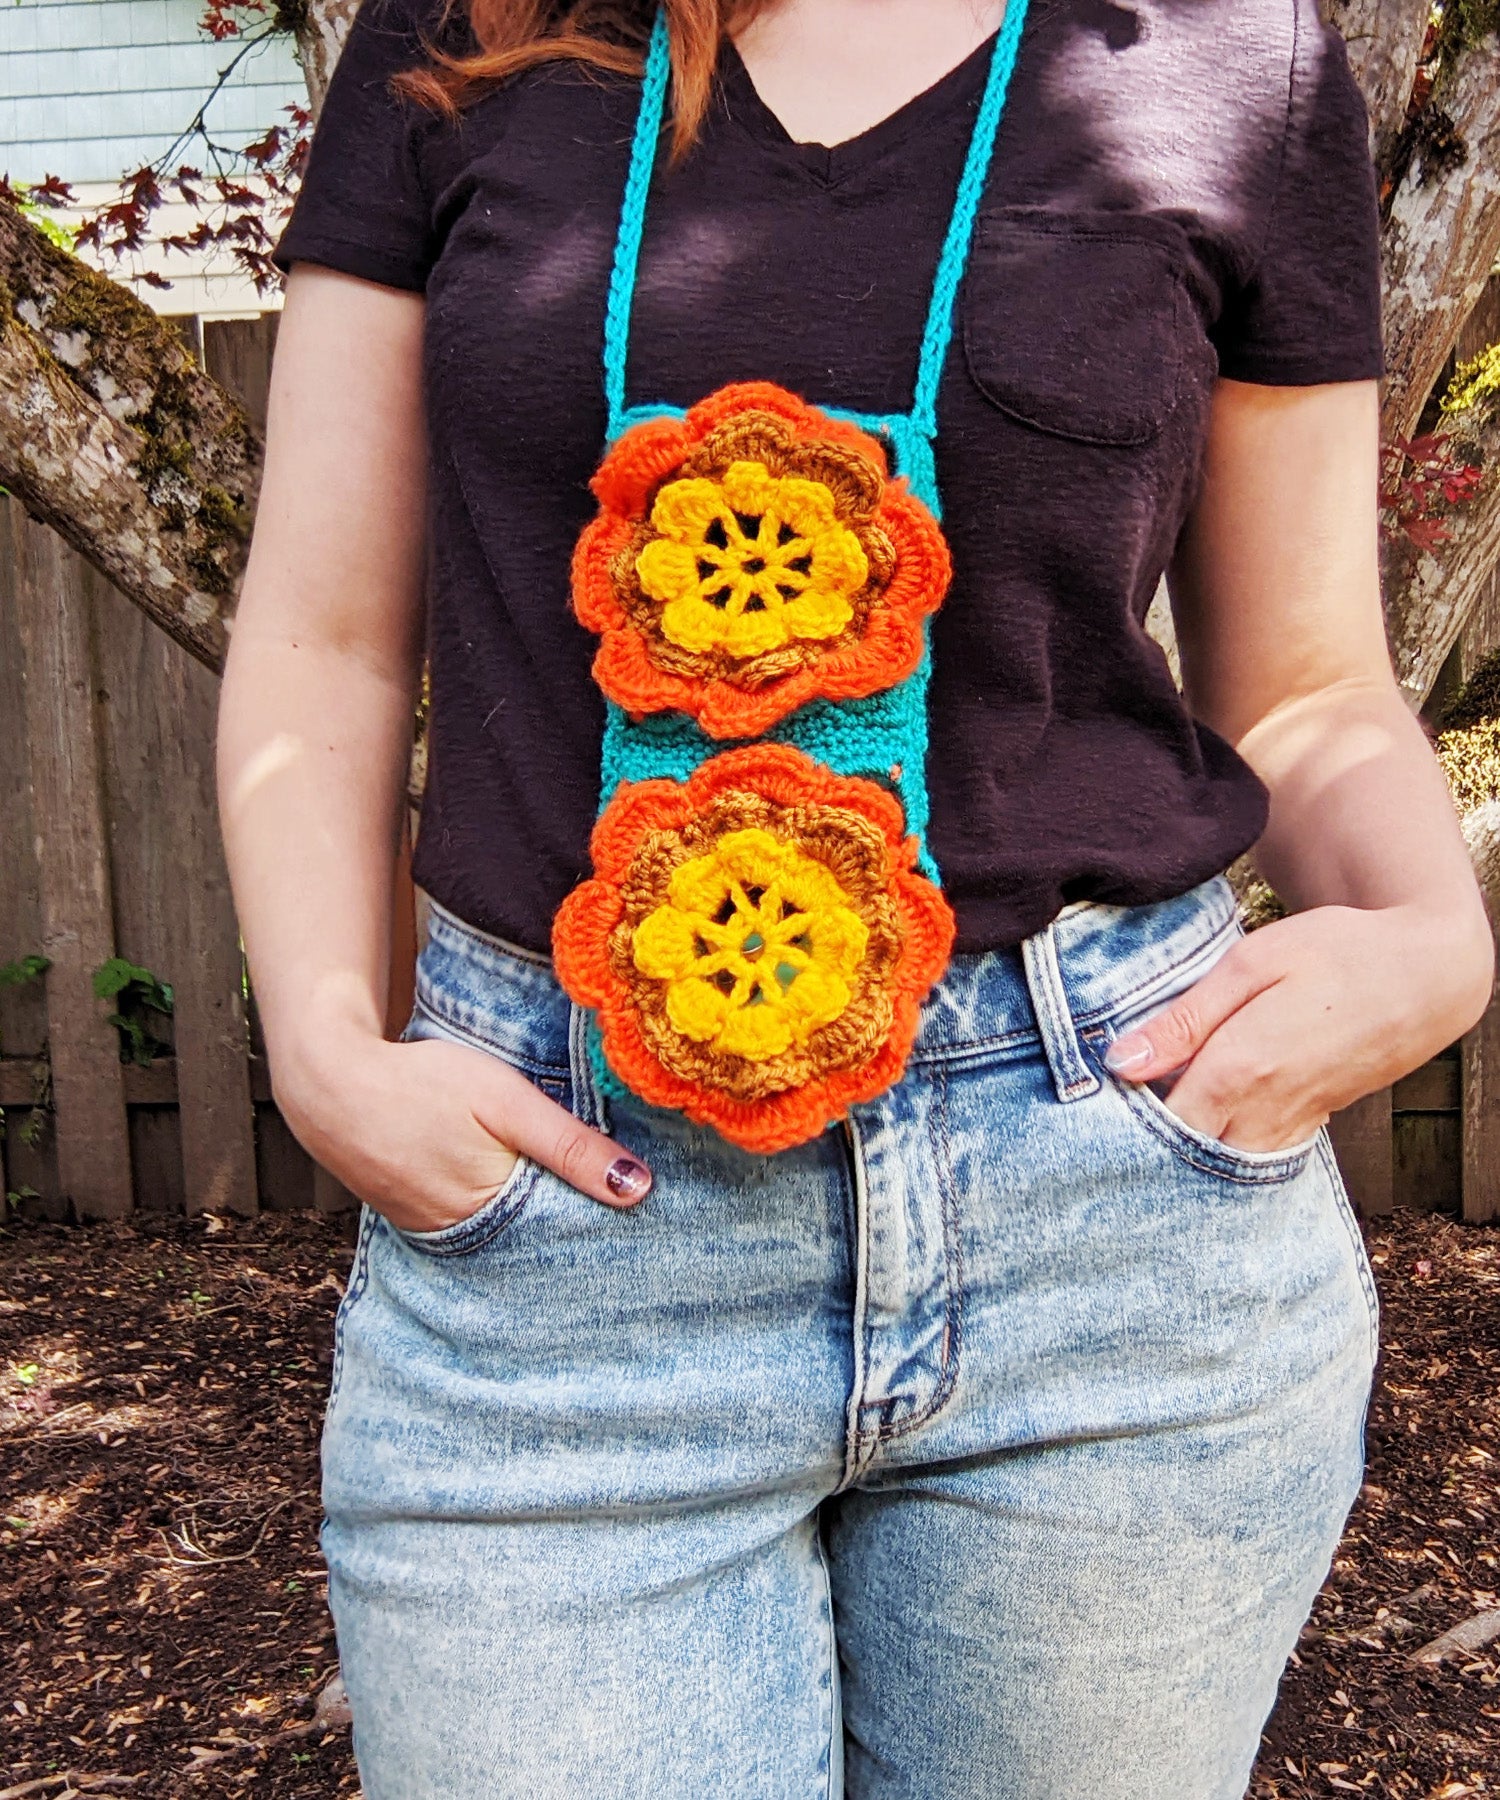 Flower Design Wooden Handle Crochet Bag | CreArtive Design